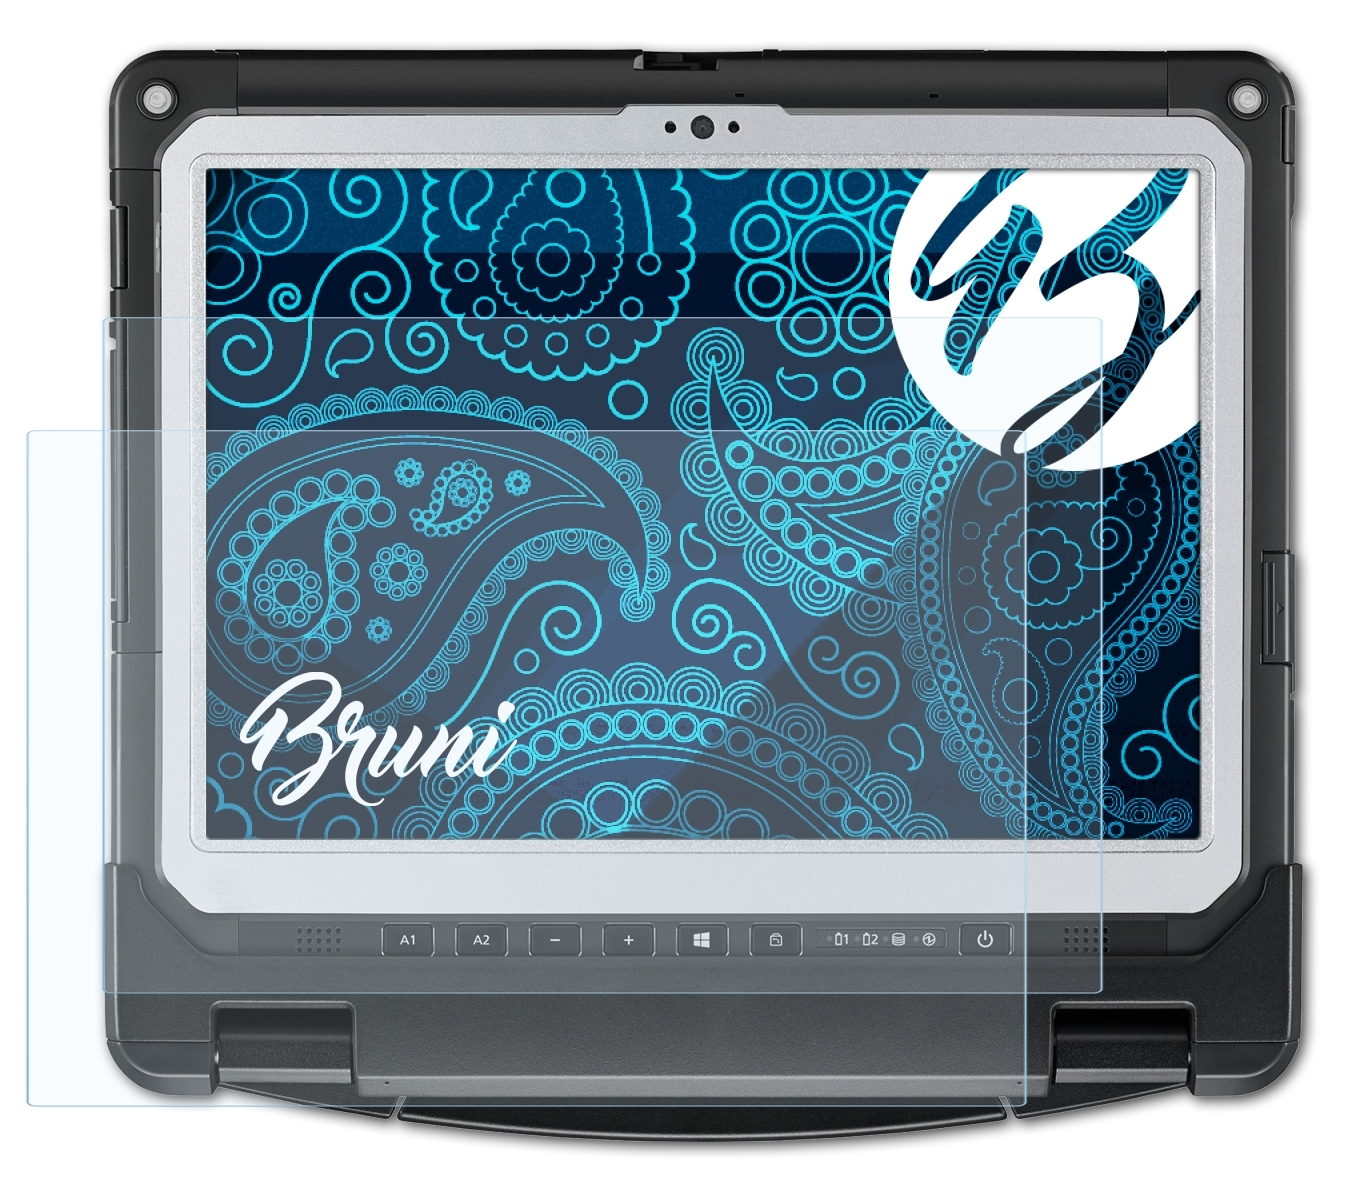 2x Schutzfolie(für 33 Tablet) Panasonic Basics-Clear BRUNI ToughBook